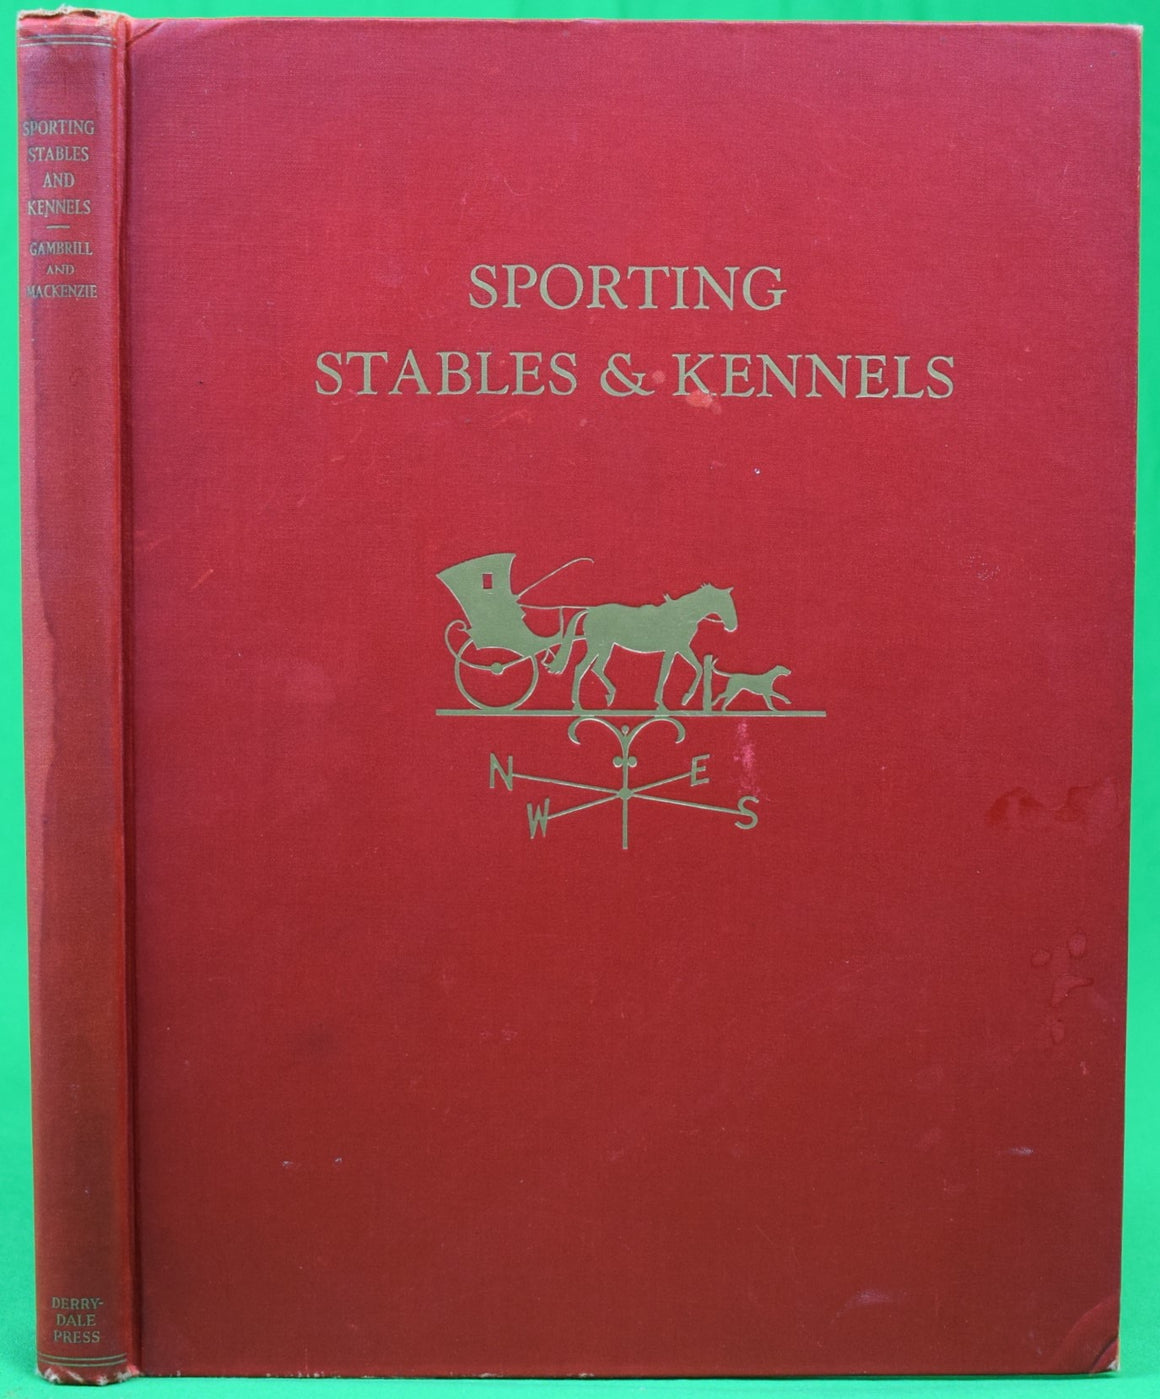 "Sporting Stables & Kennels" 1935 GAMBRILL, Richard V.N. and MACKKENZIE James C.